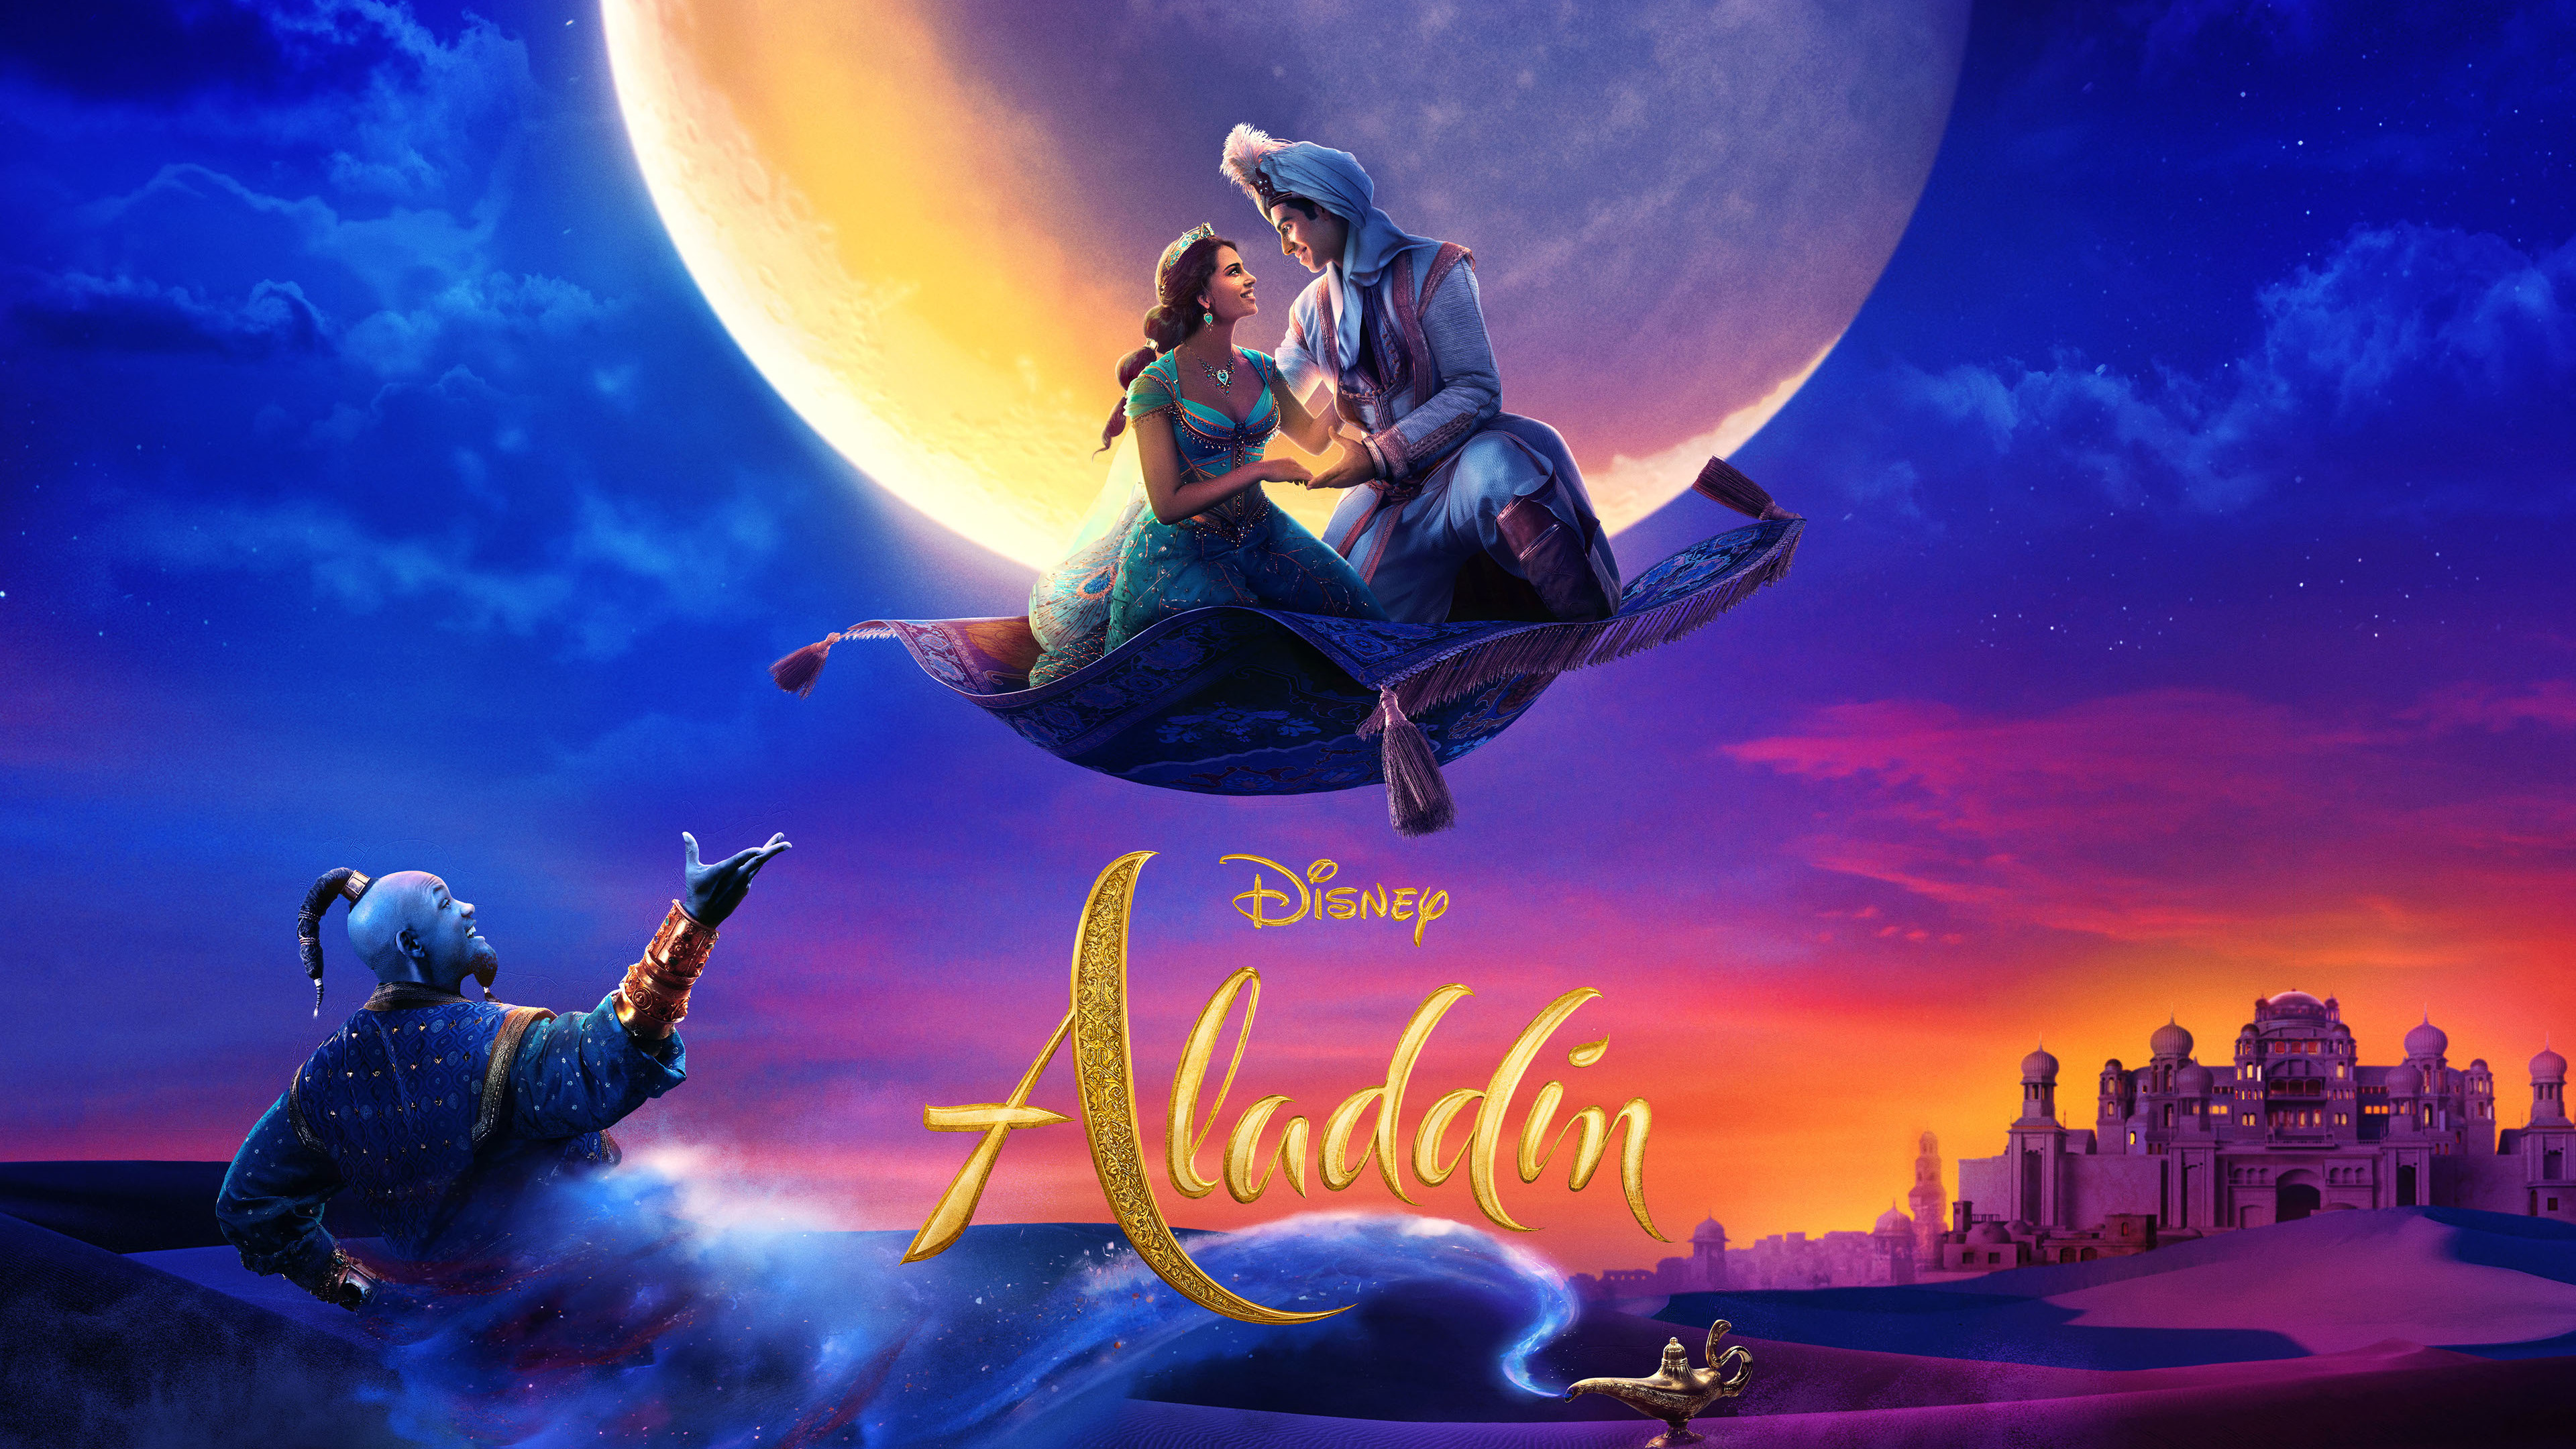 aladdin 2019 movie 4k 1558220106 - Aladdin 2019 Movie 4k - movies wallpapers, hd-wallpapers, aladdin wallpapers, aladdin movie wallpapers, 4k-wallpapers, 2019 movies wallpapers